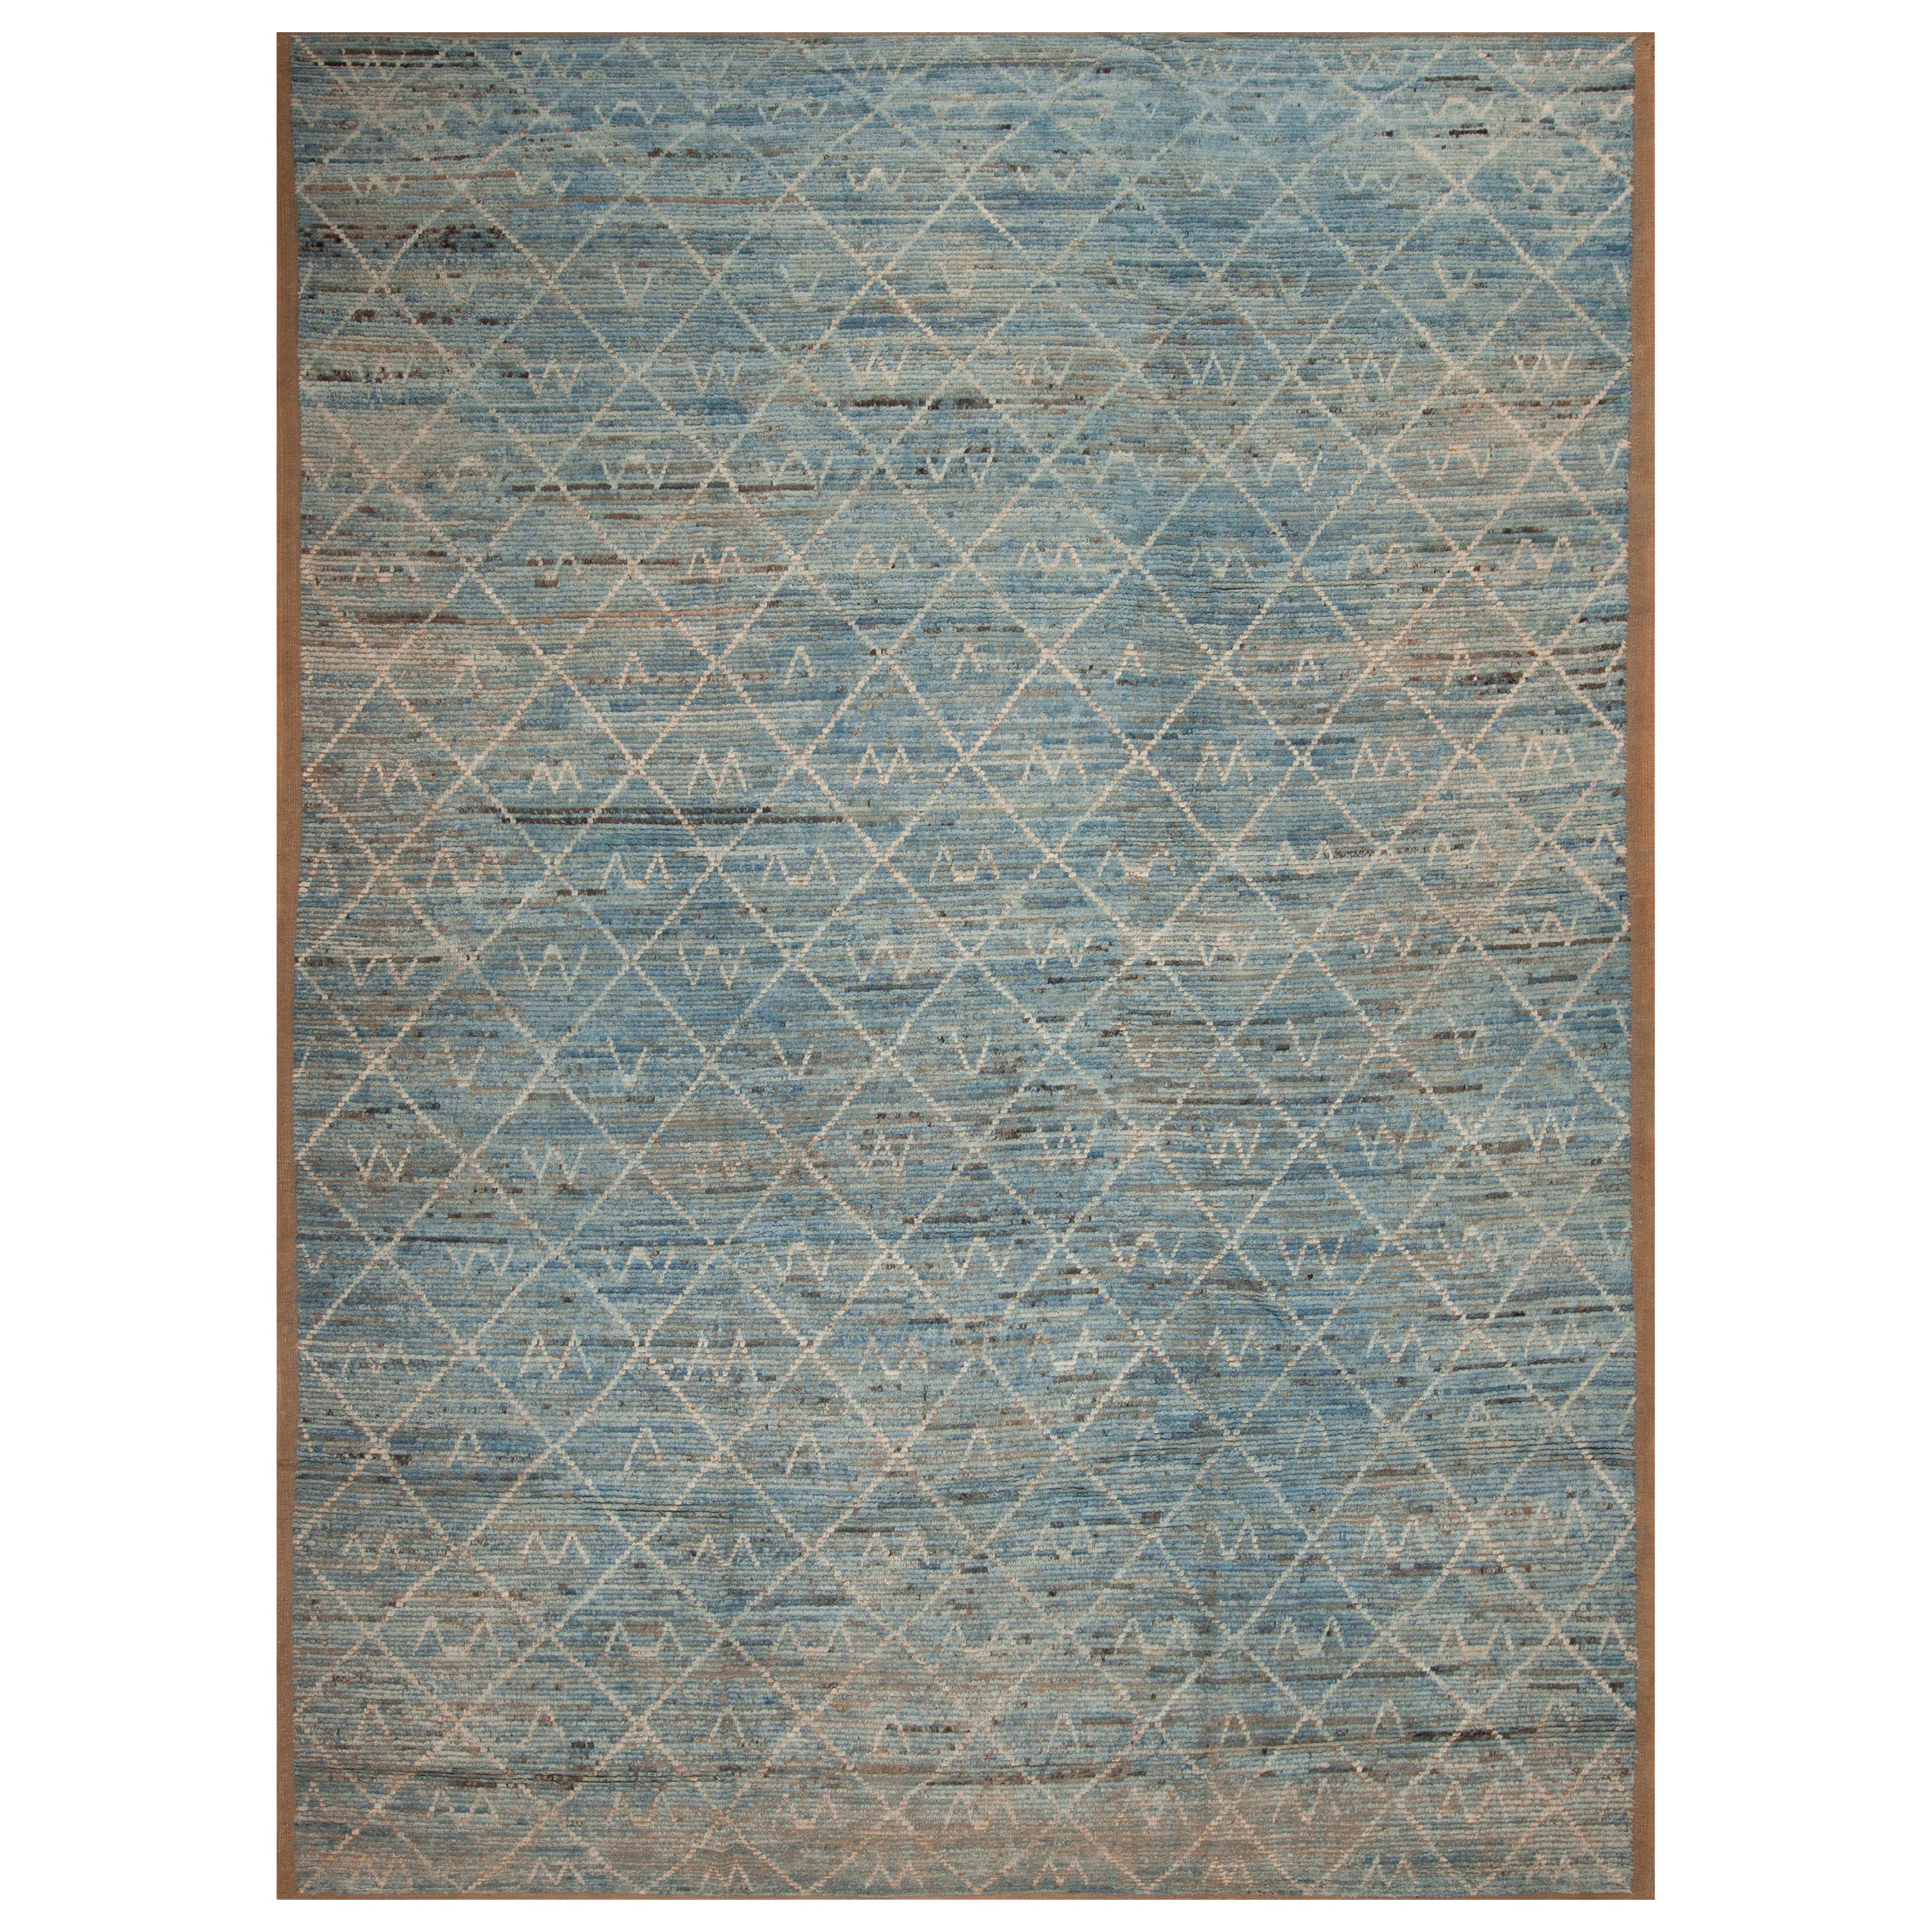 Nazmiyal Collection Blue Abrash Tribal Pattern Modern Area Rug 10'4" x 14'2" For Sale